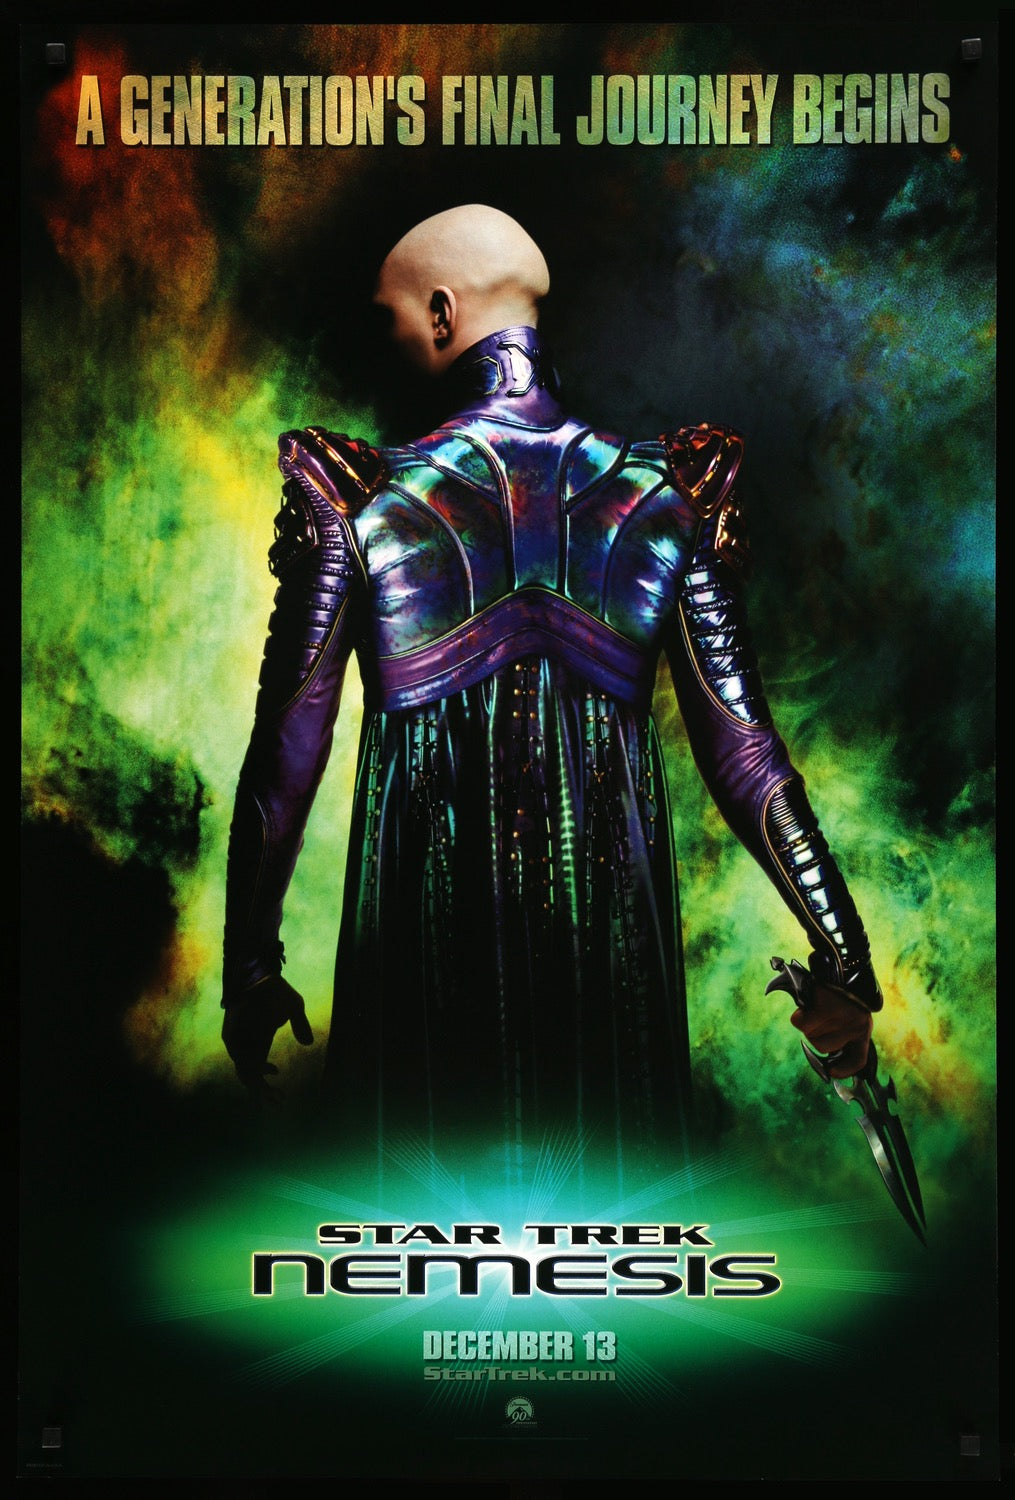 Star Trek: Nemesis (2002) original movie poster for sale at Original Film Art